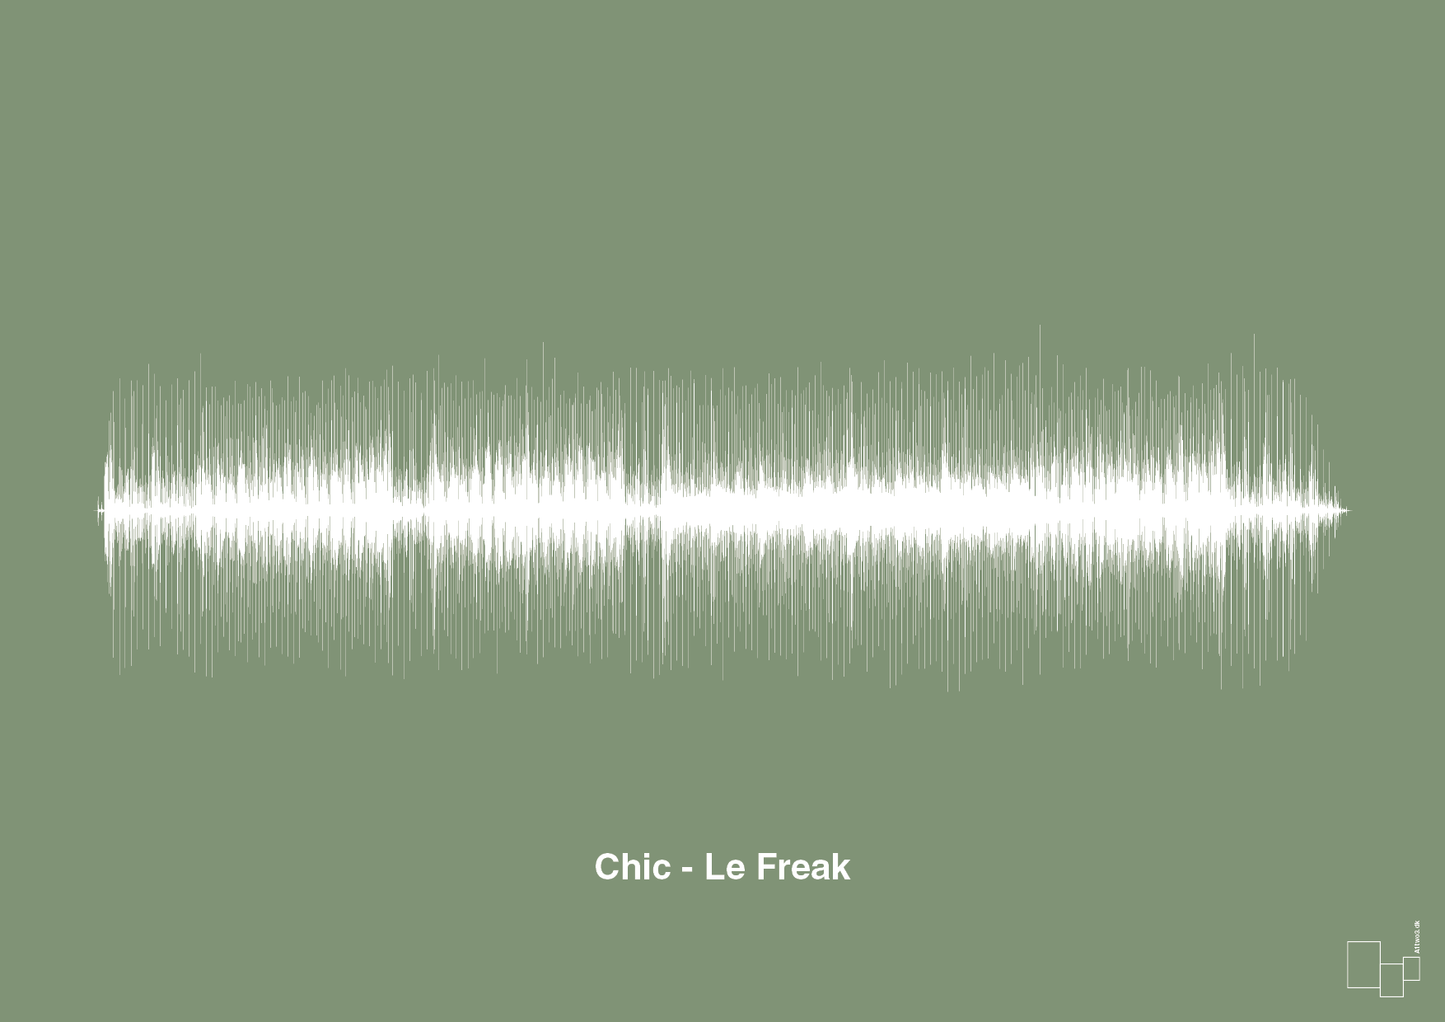 chic - le freak - Plakat med Musik i Jade